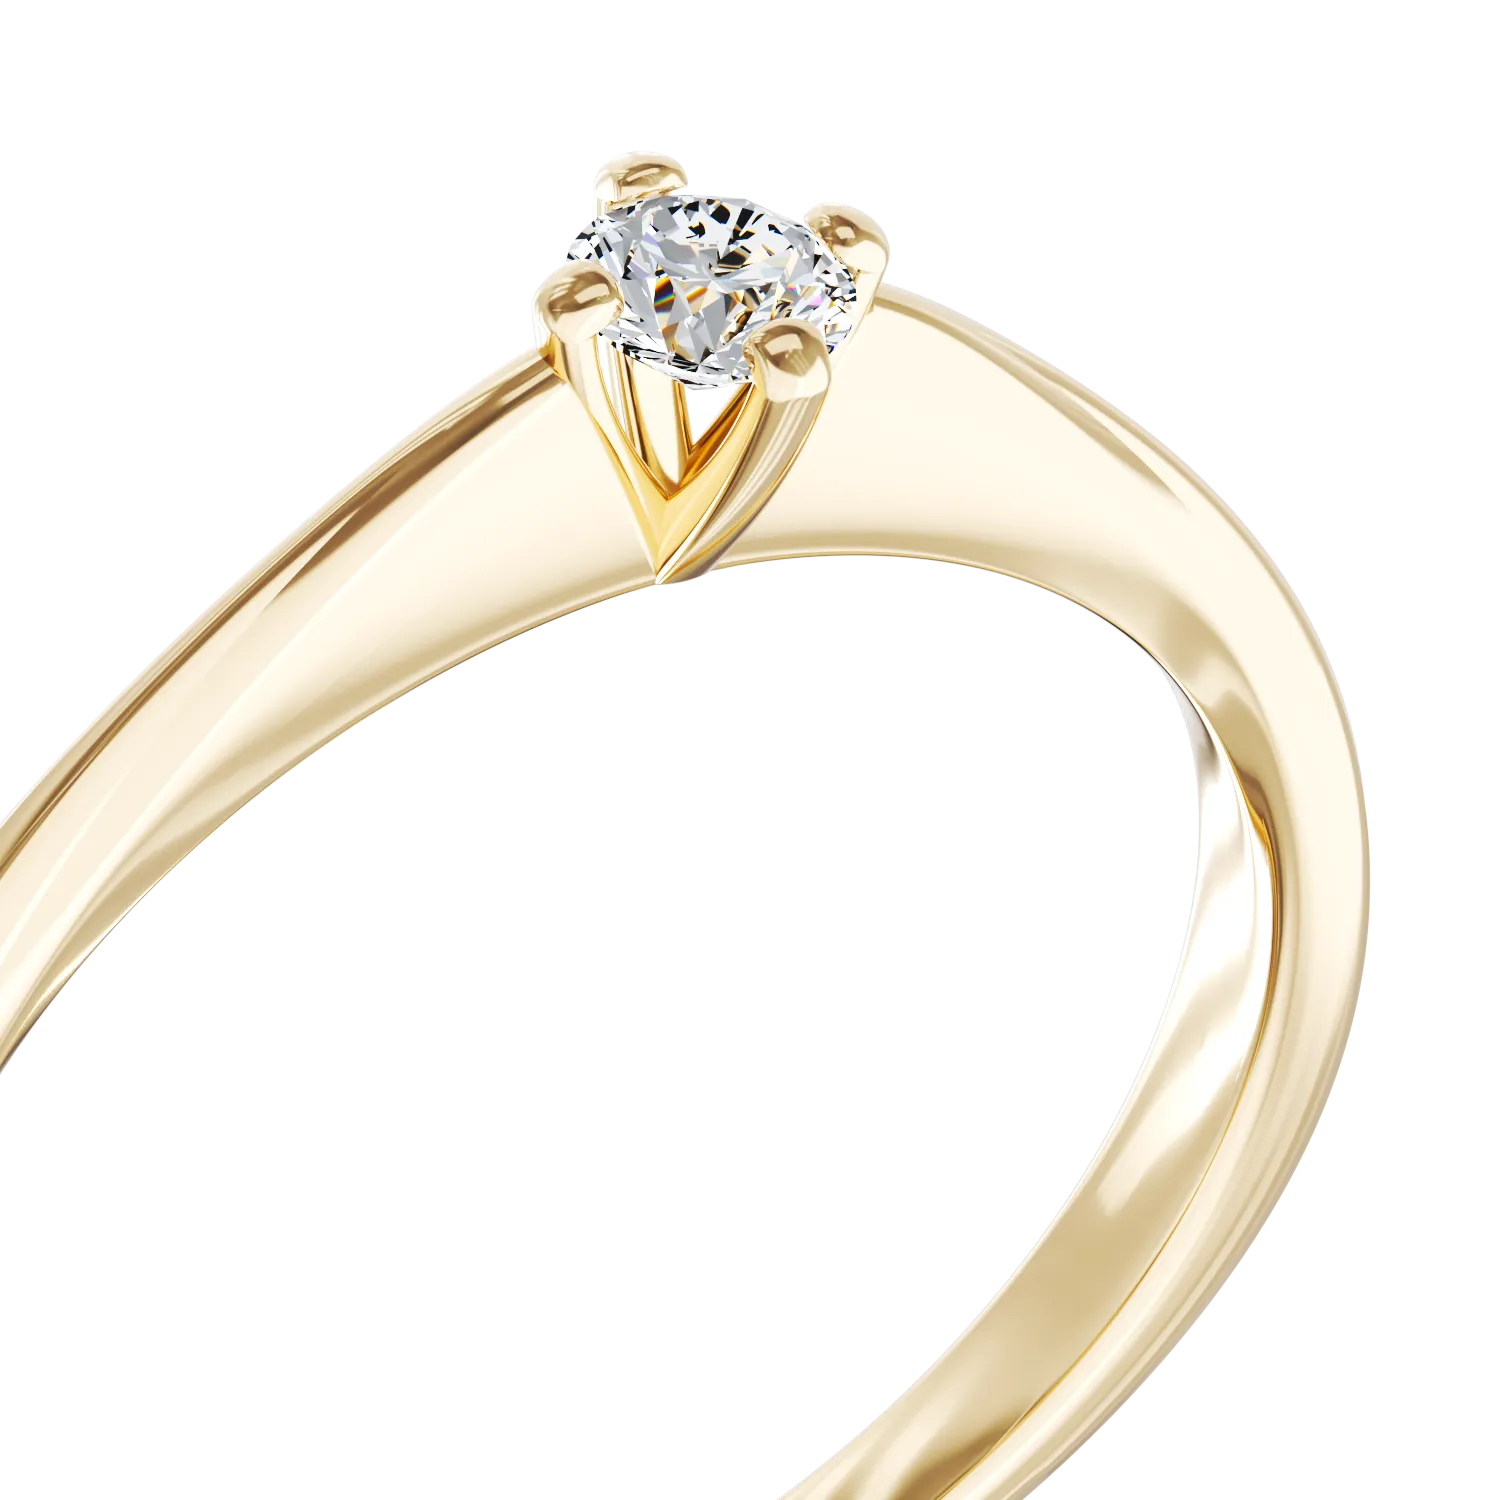 Inel de logodna din aur galben de 18K cu un diamant solitaire de 0.11ct